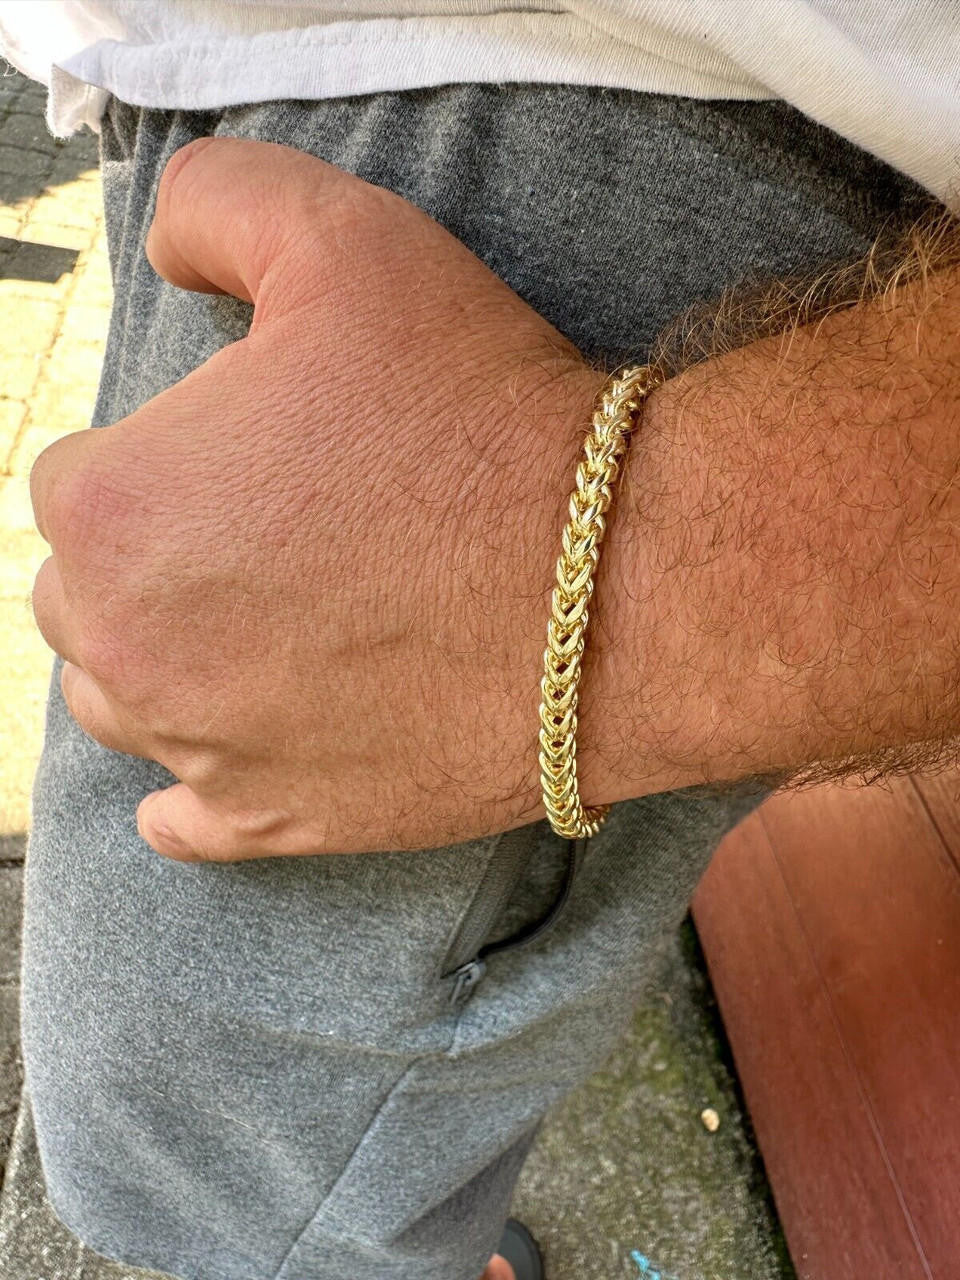 14k Gold Franco Link Bracelet 4-6mm With Moissanite Clasp